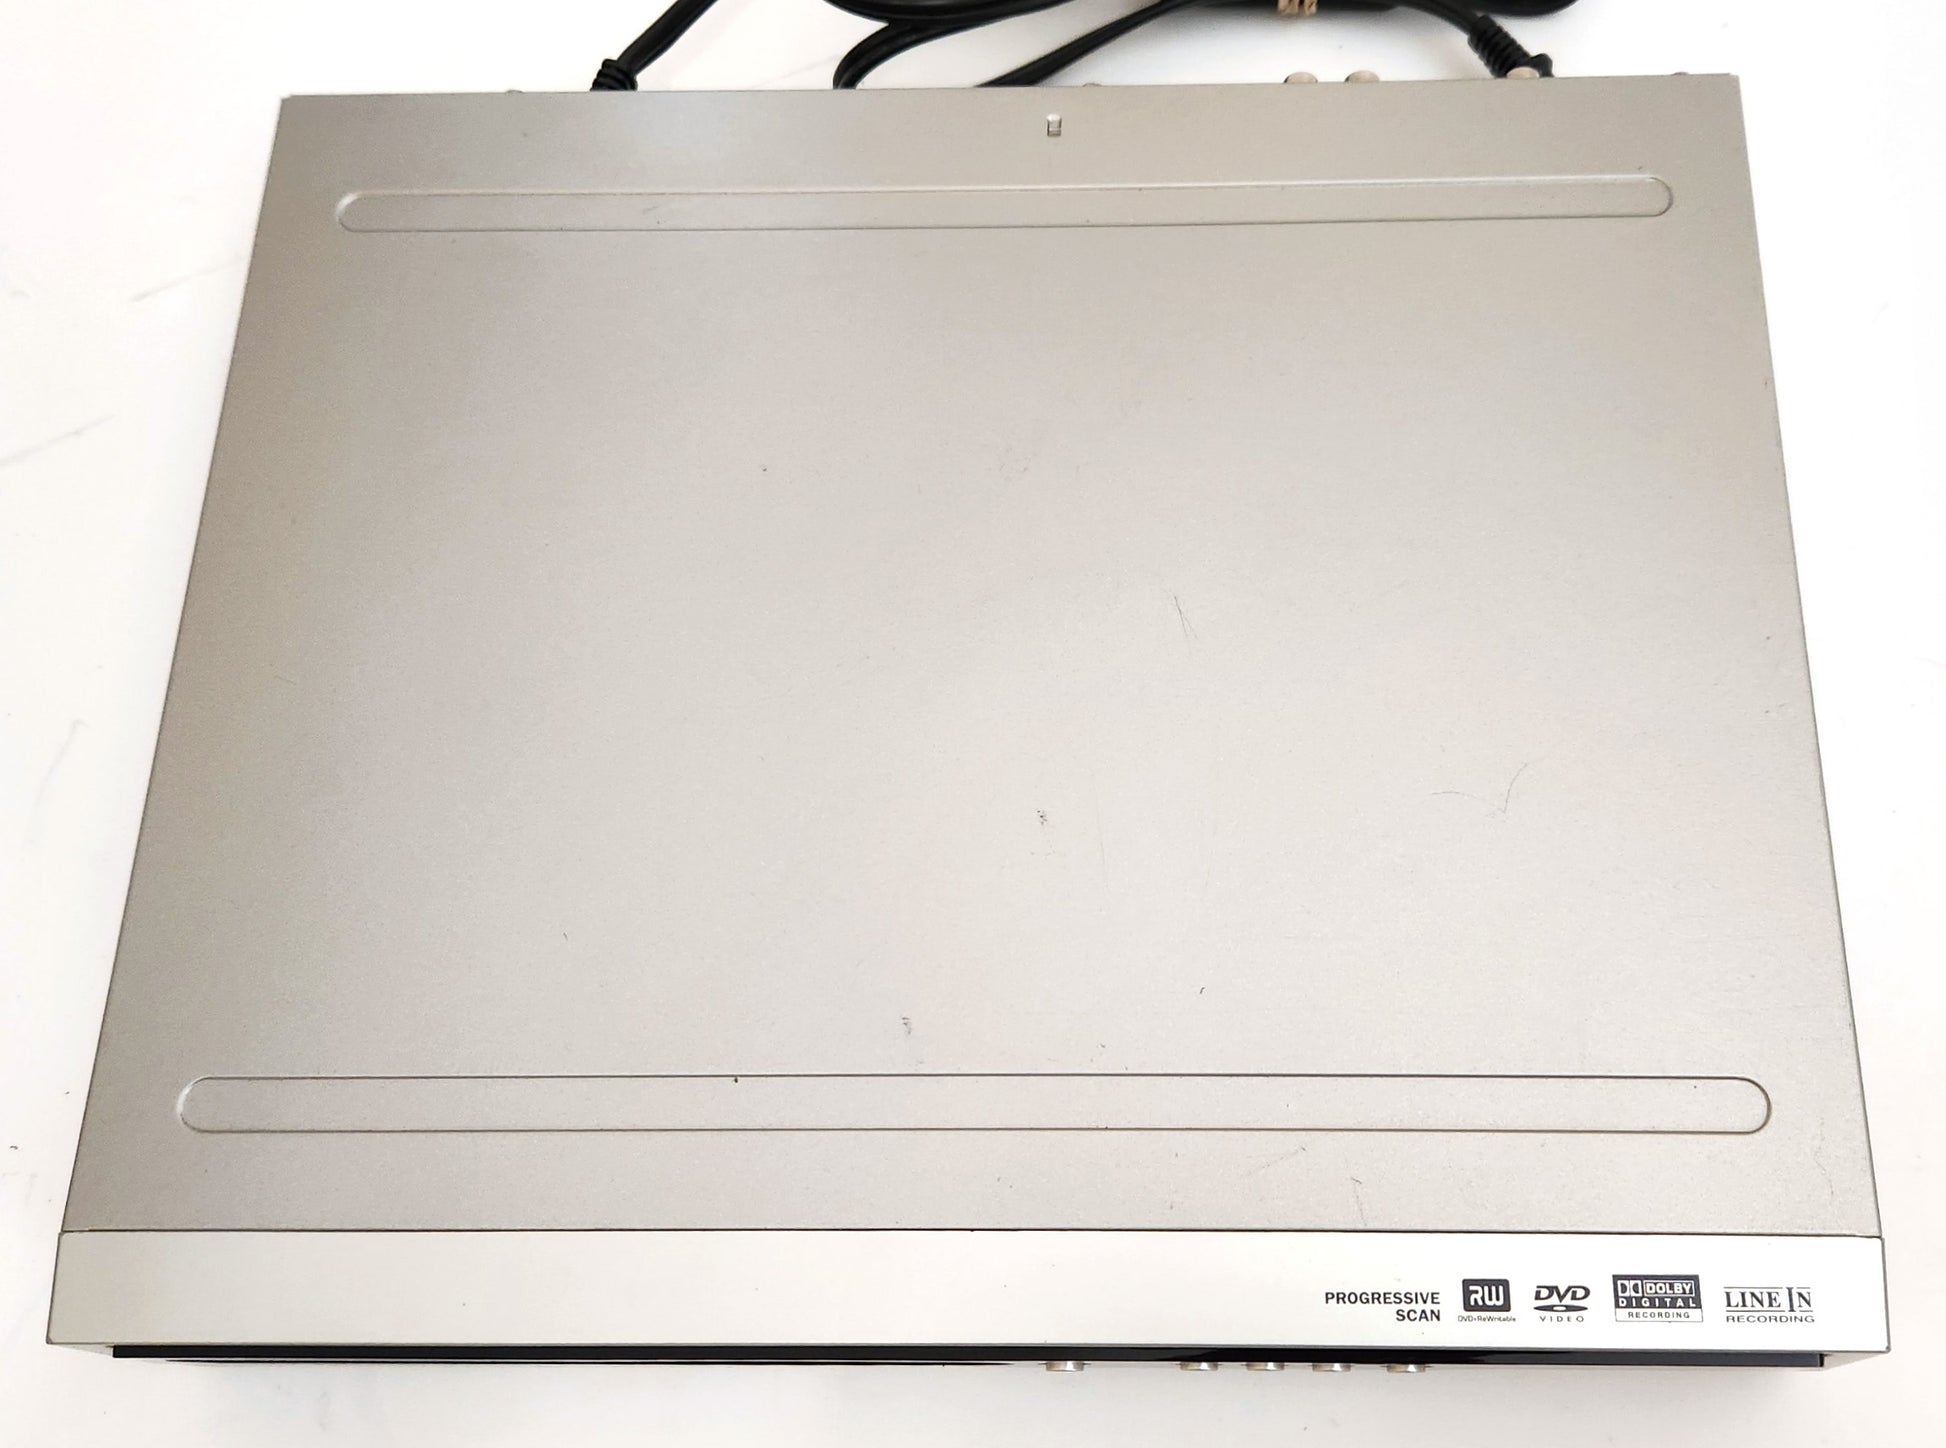 Magnavox ZC320MW8 DVD Recorder - Top